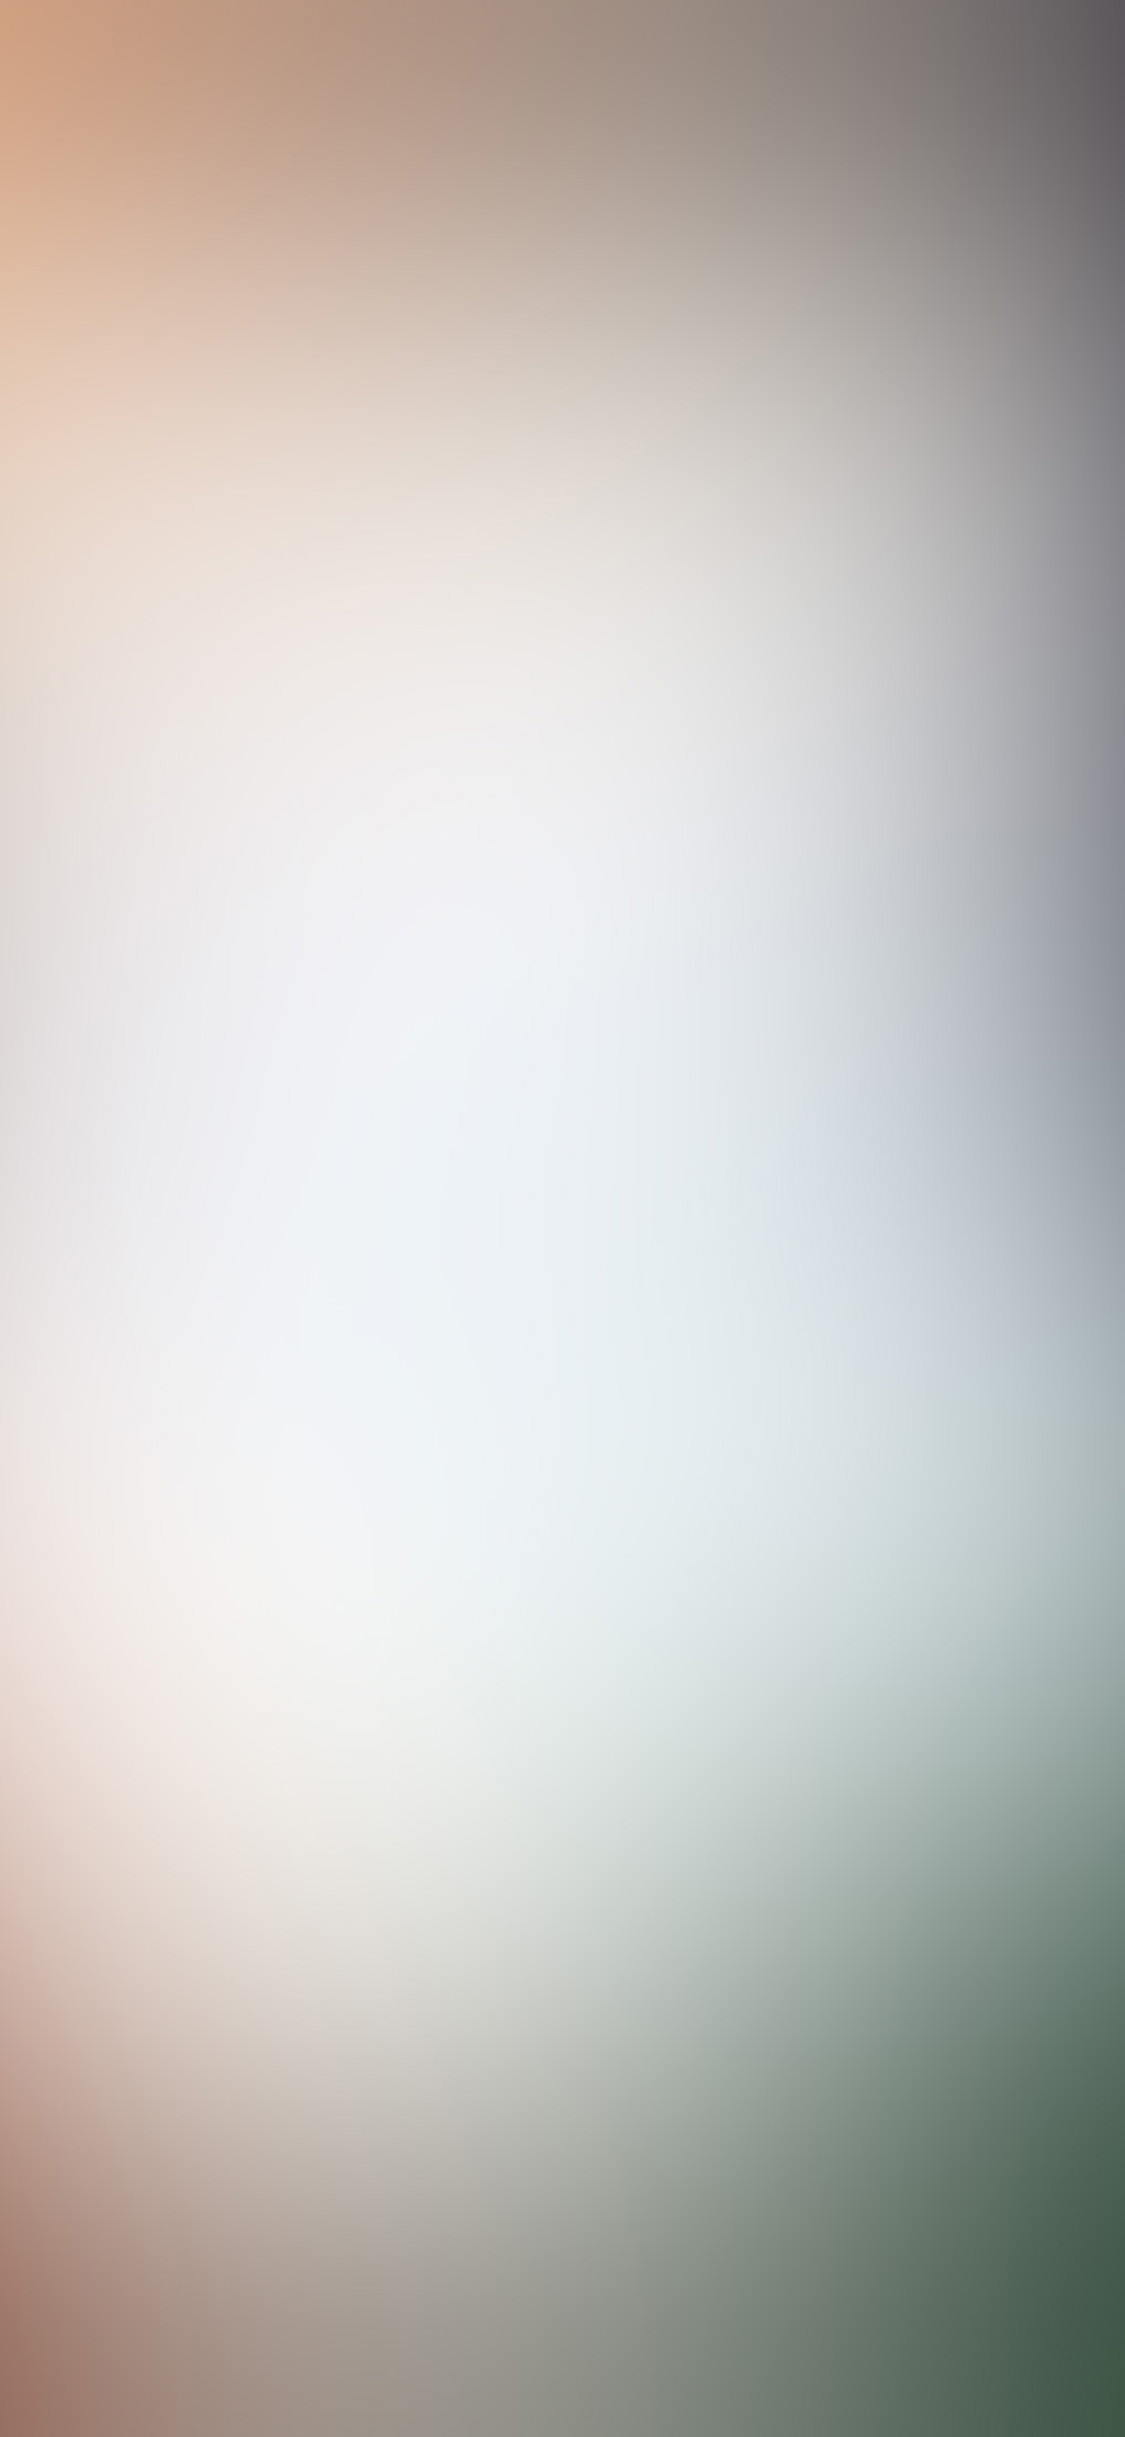 1125x2437 work-hard-gradation-blur iPhone X Wallpaper